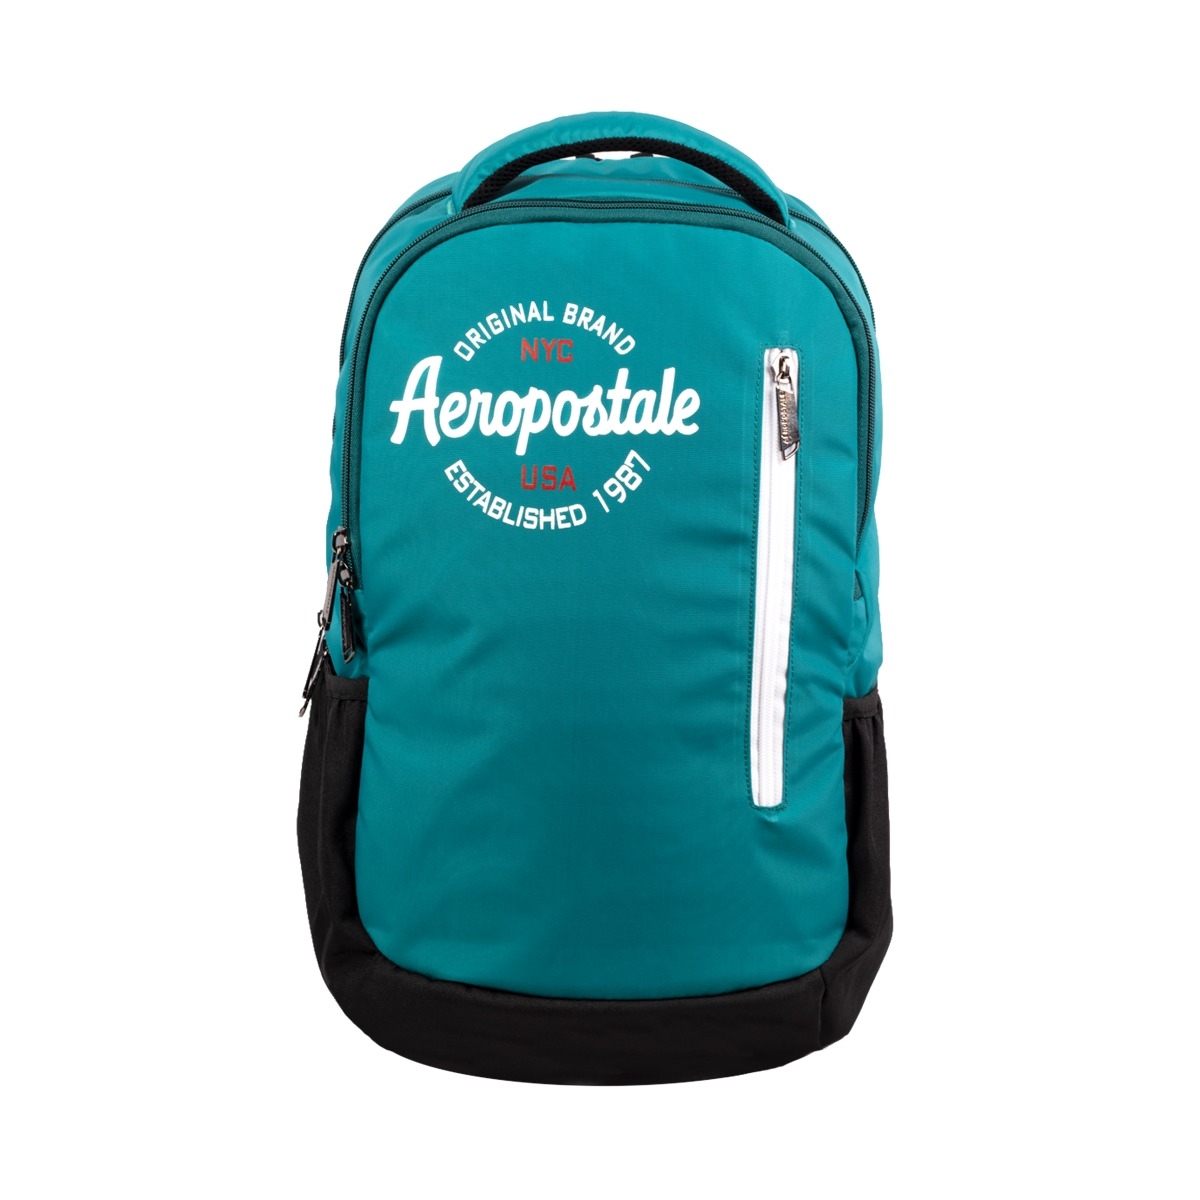 Aeropostale | AEROPOSTALE Backpack with 2 Main Compartment Laptop ipad Pocket